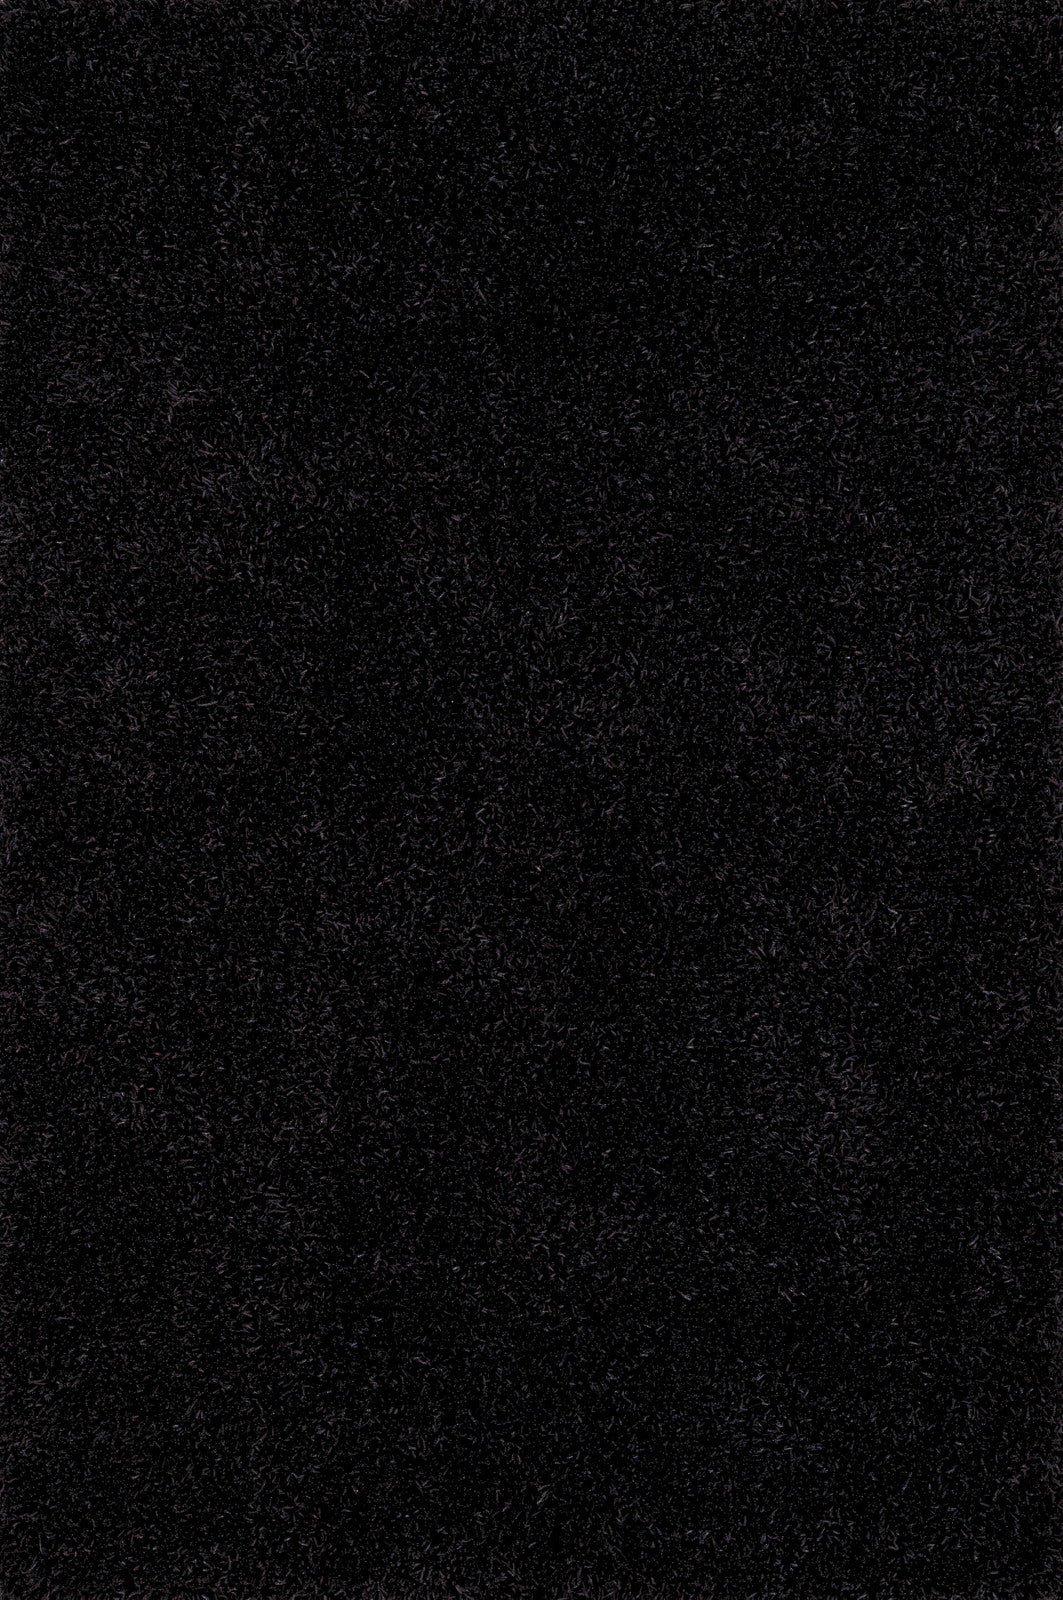 Dalyn Illusions IL69 Black Area Rug main image